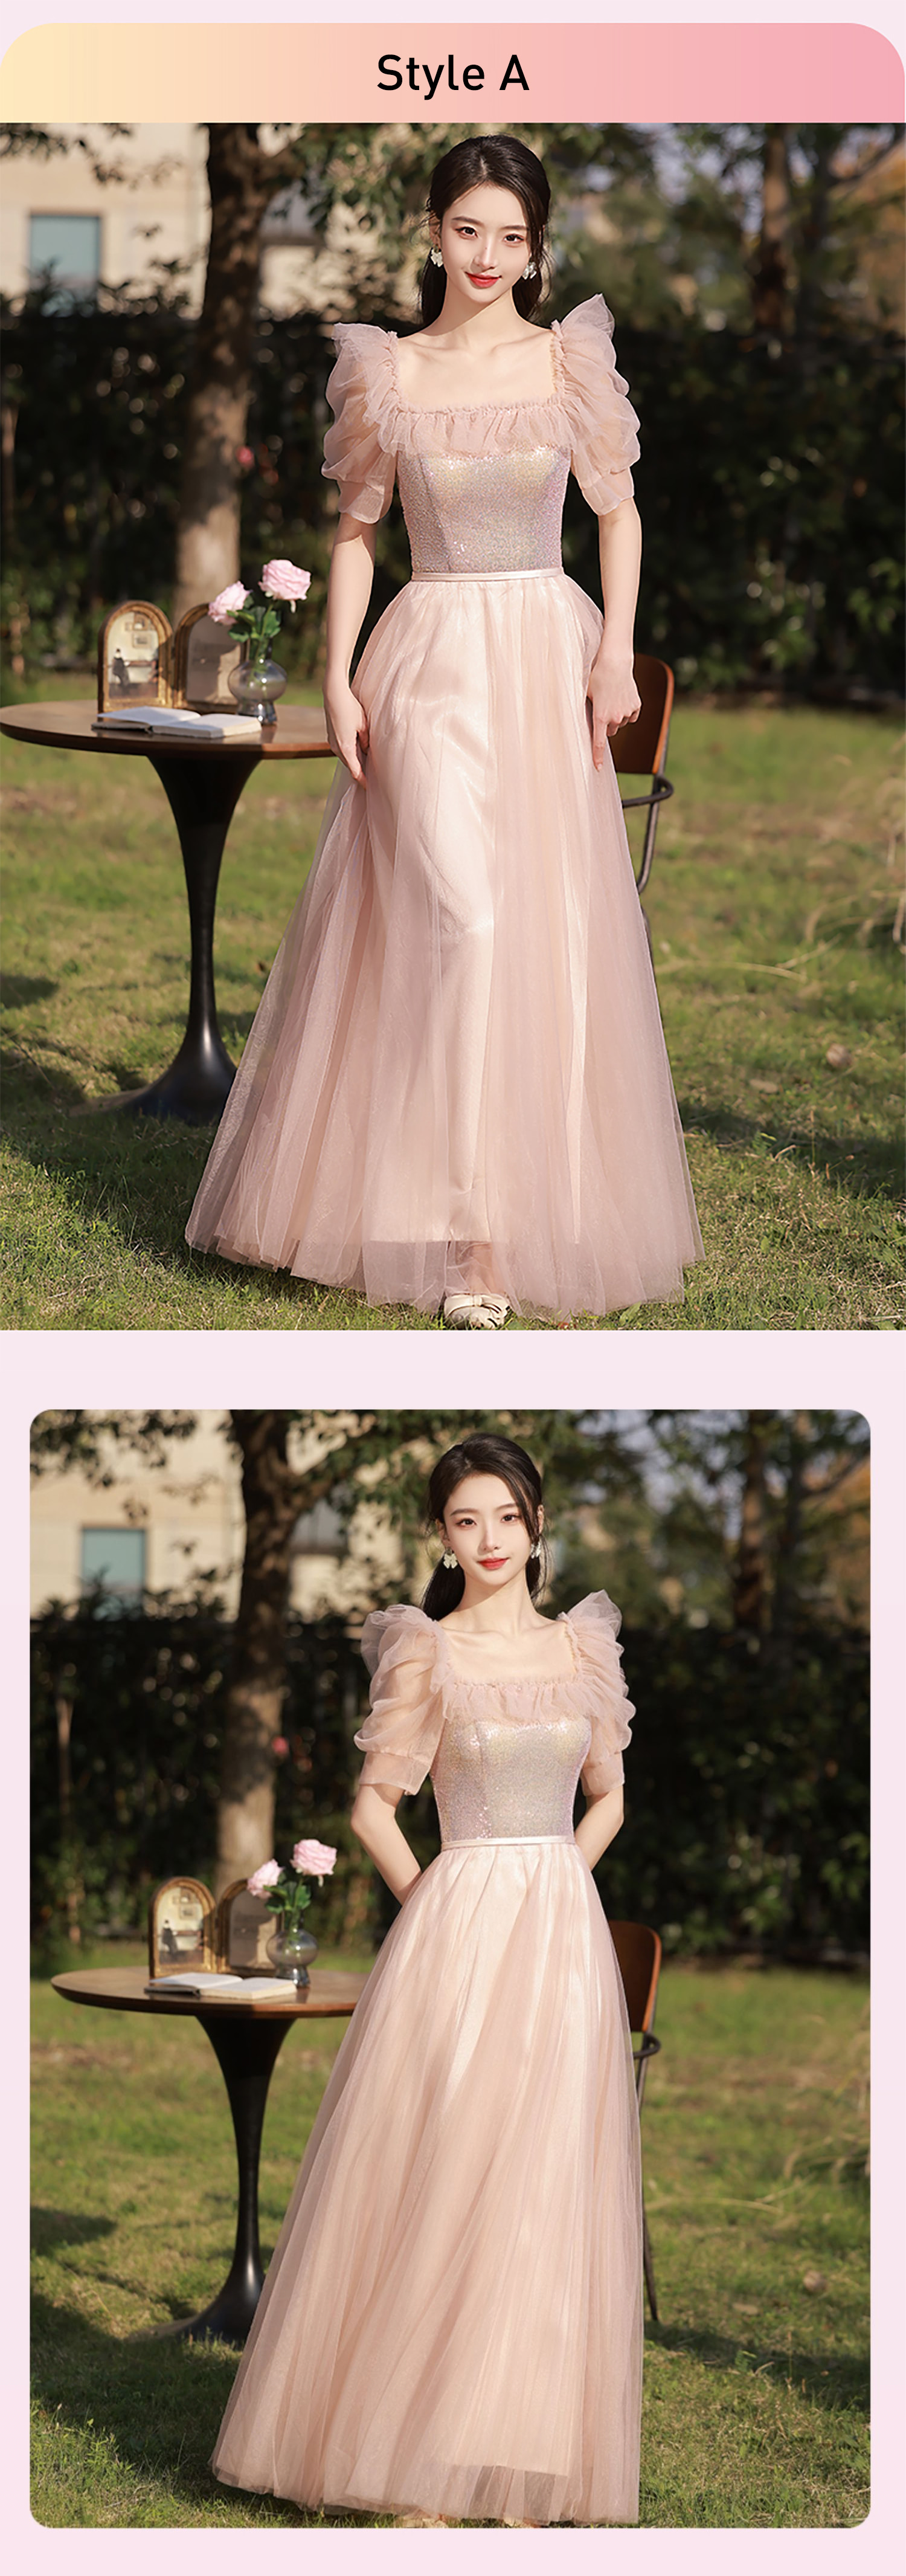 Elegant-Pink-Maxi-Dress-for-Prom-Wedding-Bridesmaid-Birthday-Party19.jpg